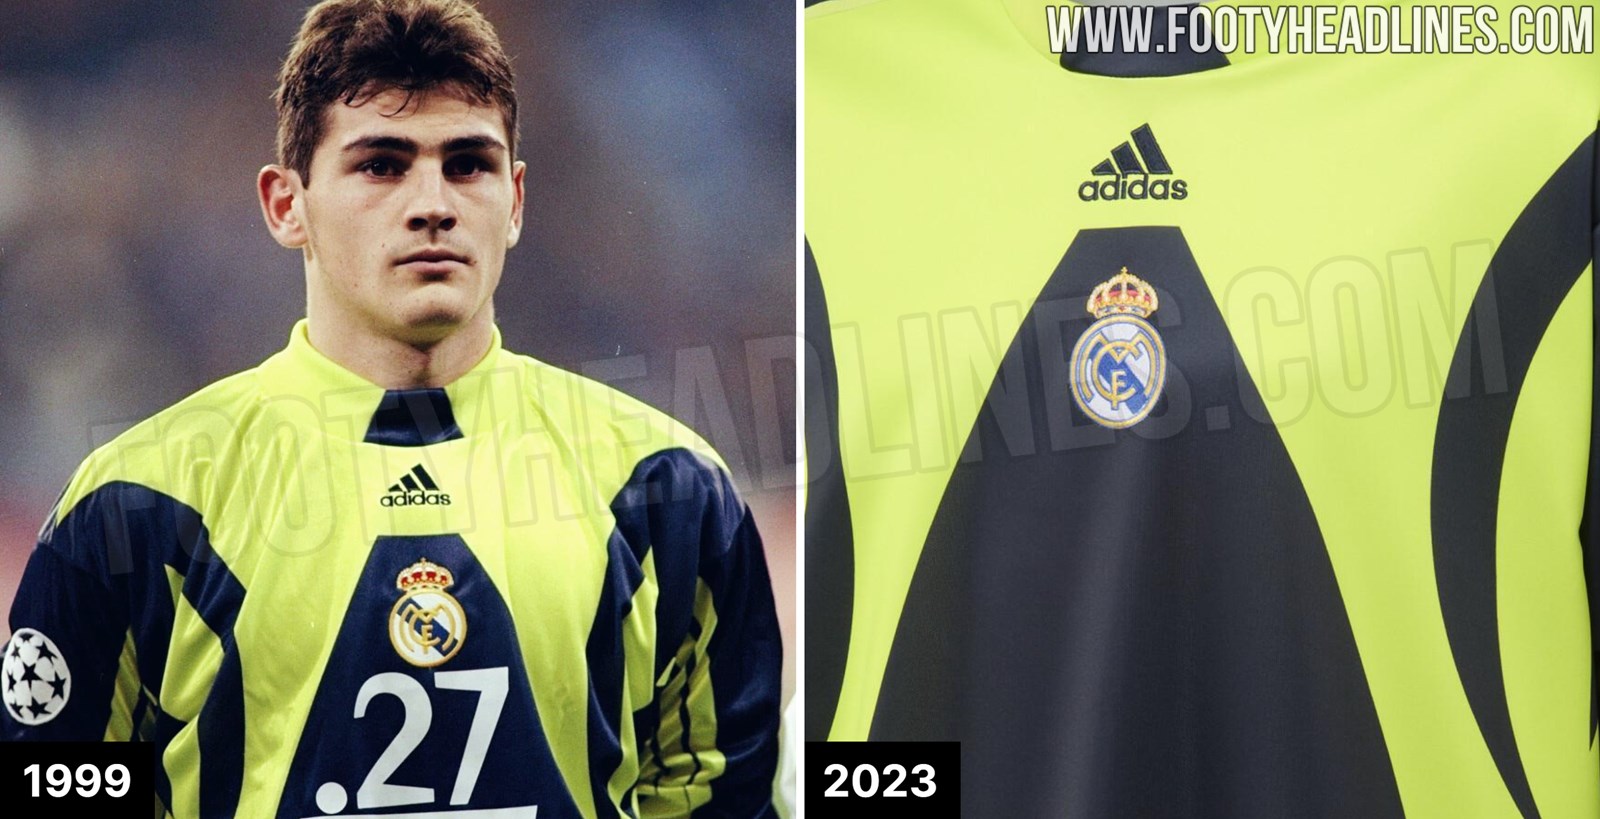 New Real Madrid 2023 Goalkeeper Remake Kit Leaked - Footy Headlines